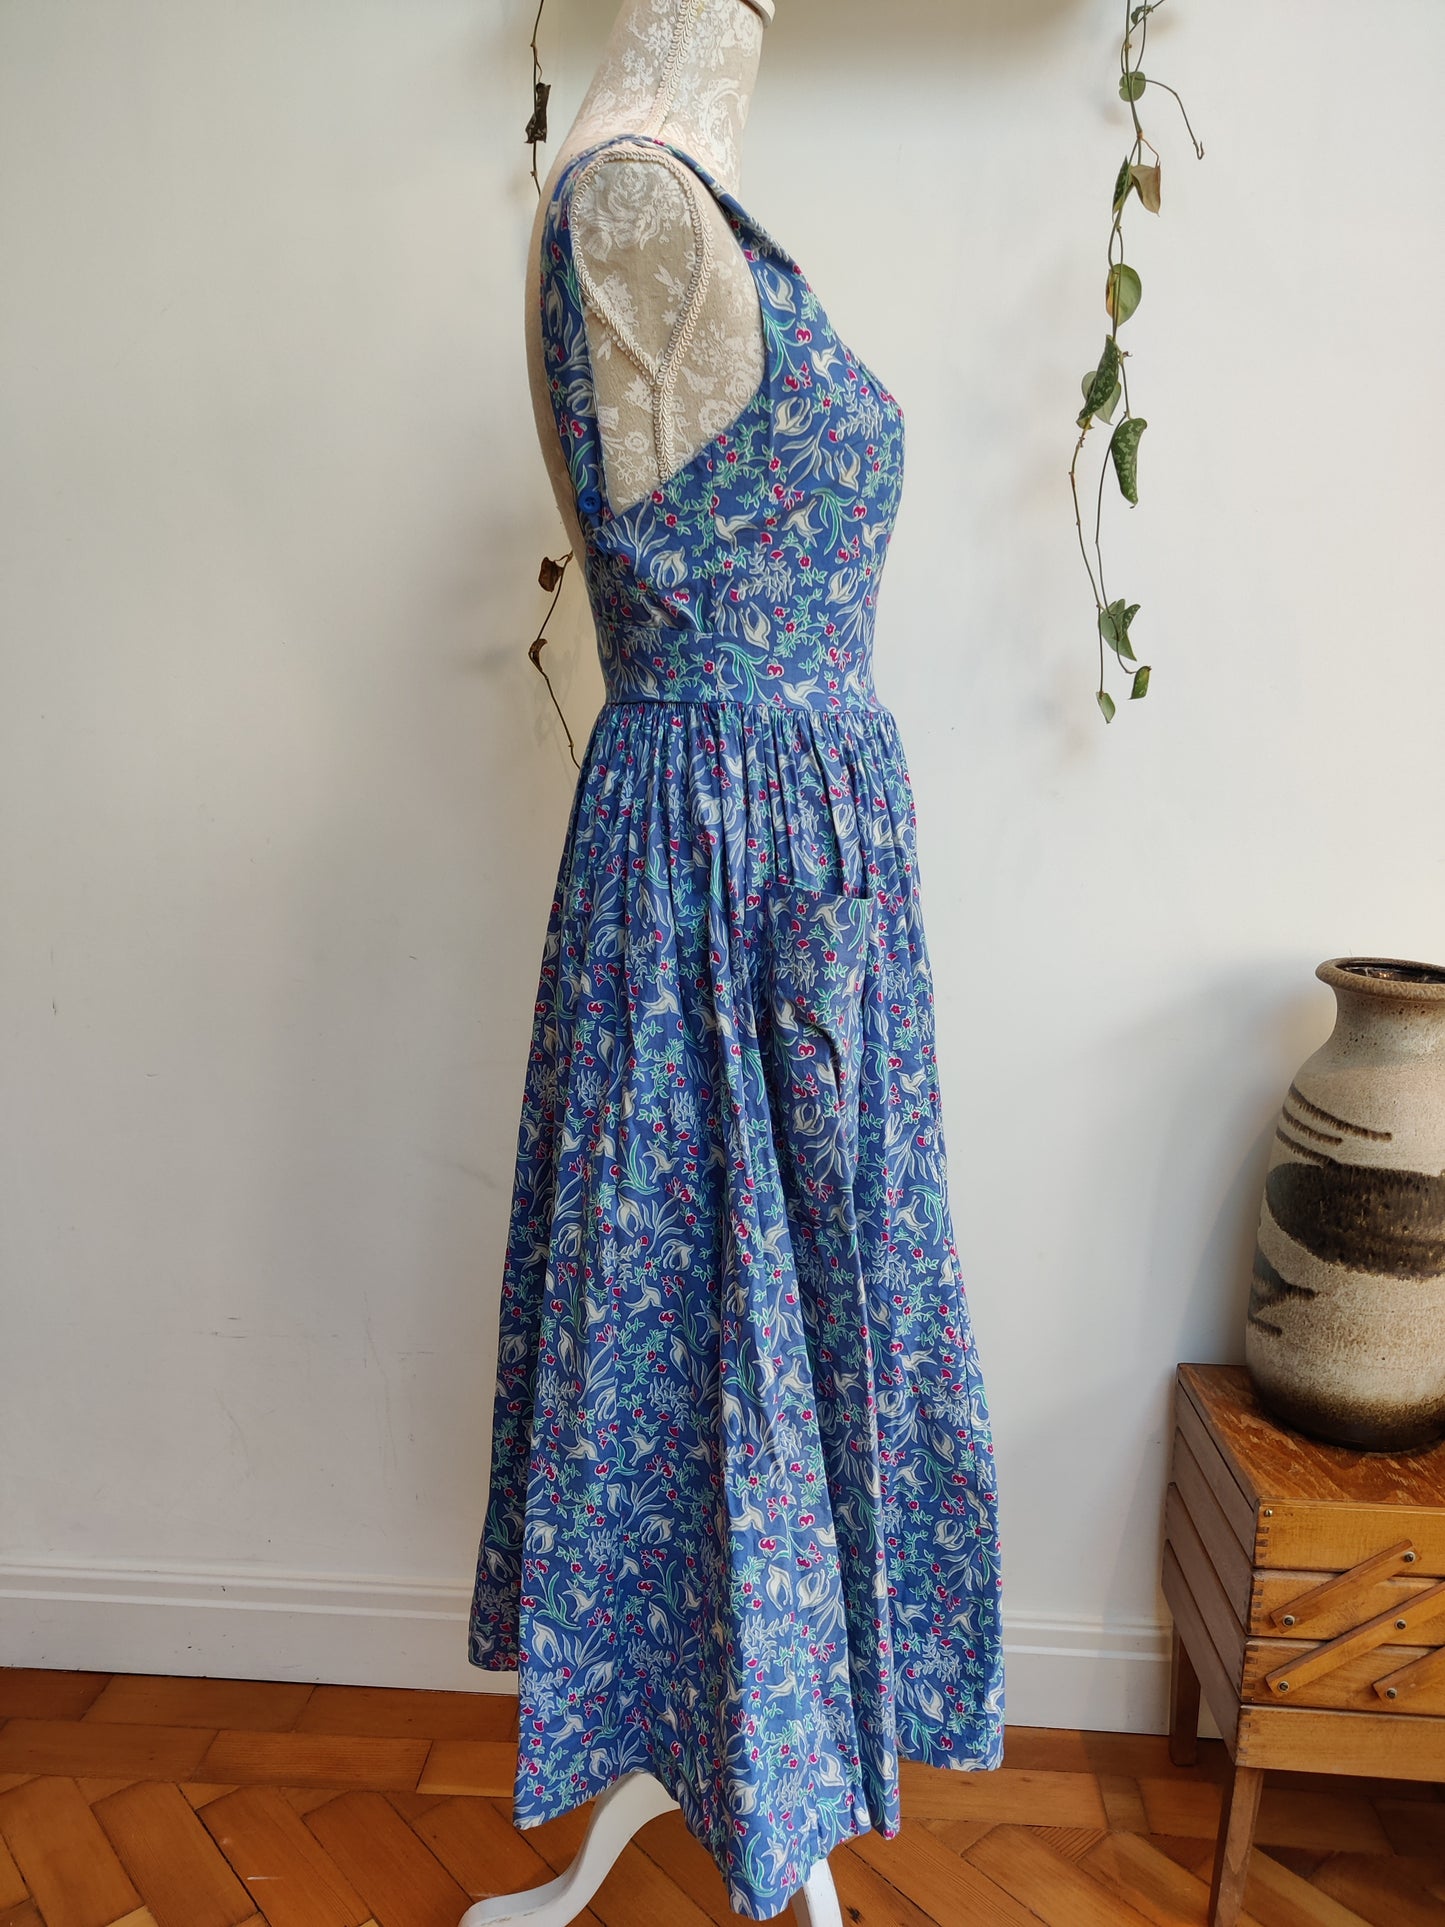 Vintage Laura Ashley sleeveless dress with pockets